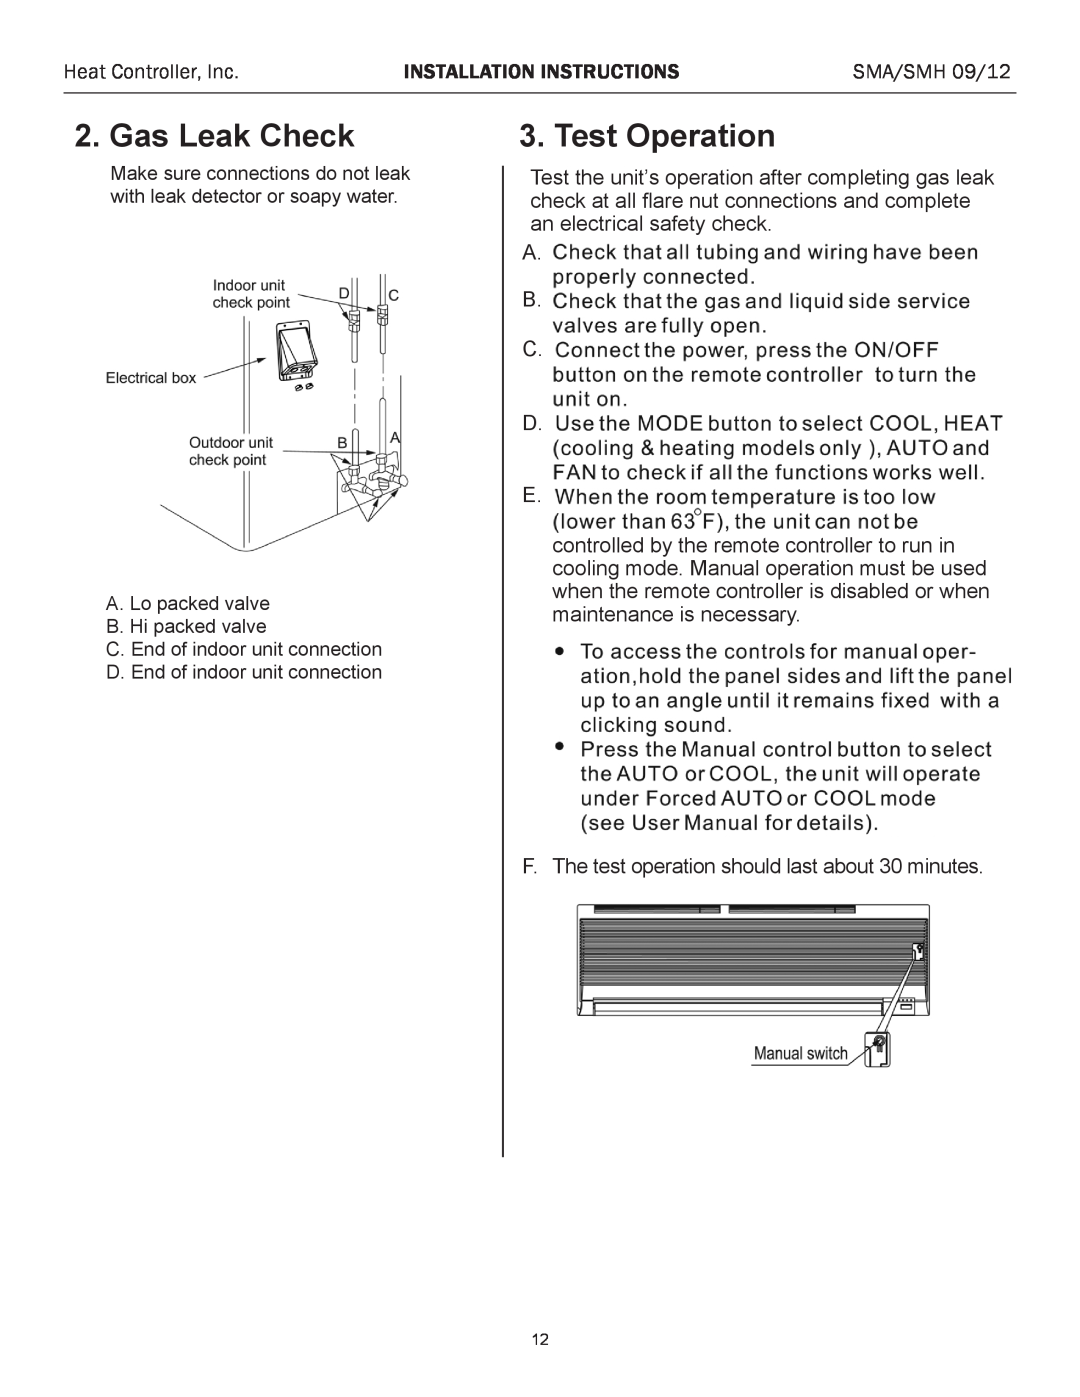 Heat Controller SMA 12, SMH 12, SMA/SMH 09/12 installation instructions Gas Leak Check, Test Operation 